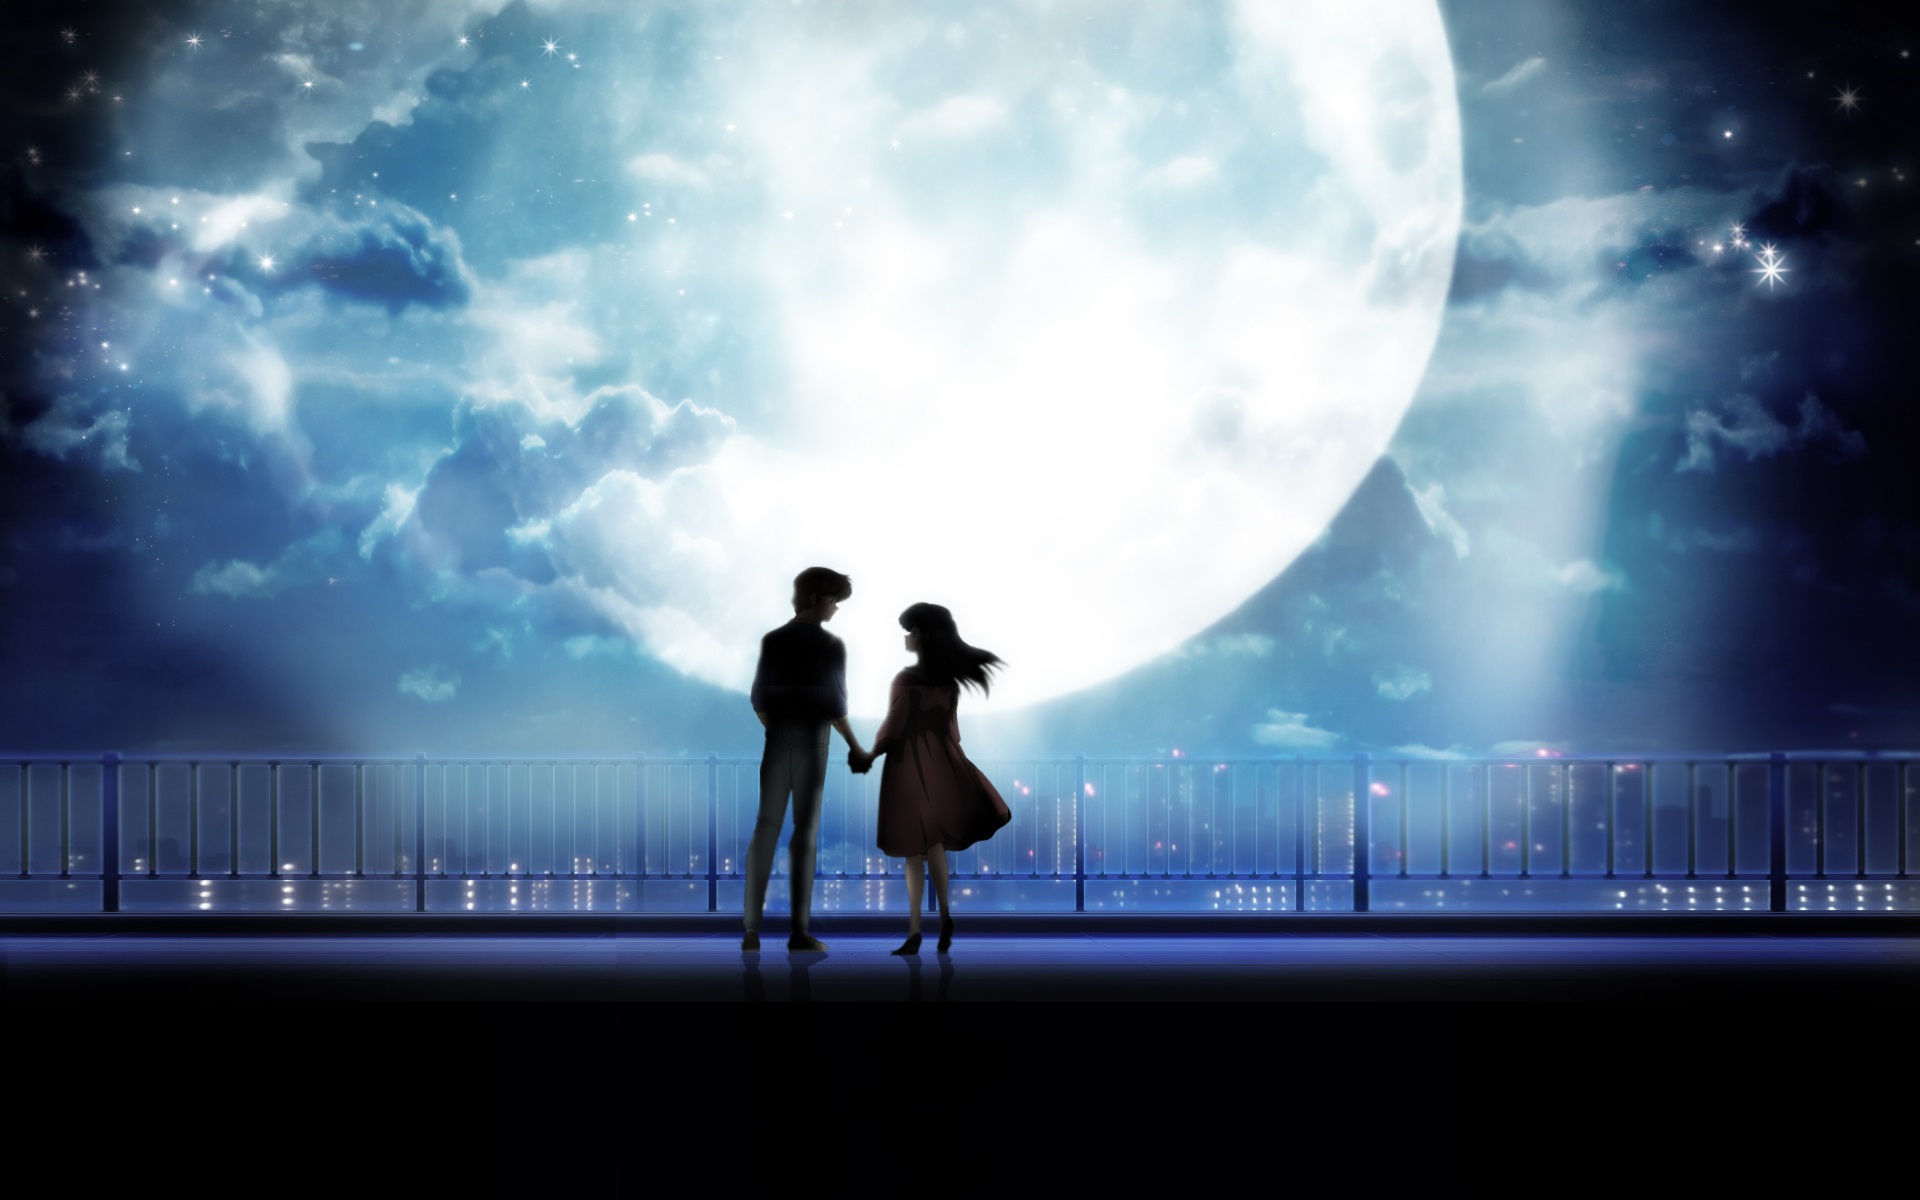 Beautiful Girl On Moonlight!!!! :) - Anime Lovers Wallpapers and Images -  Desktop Nexus Groups